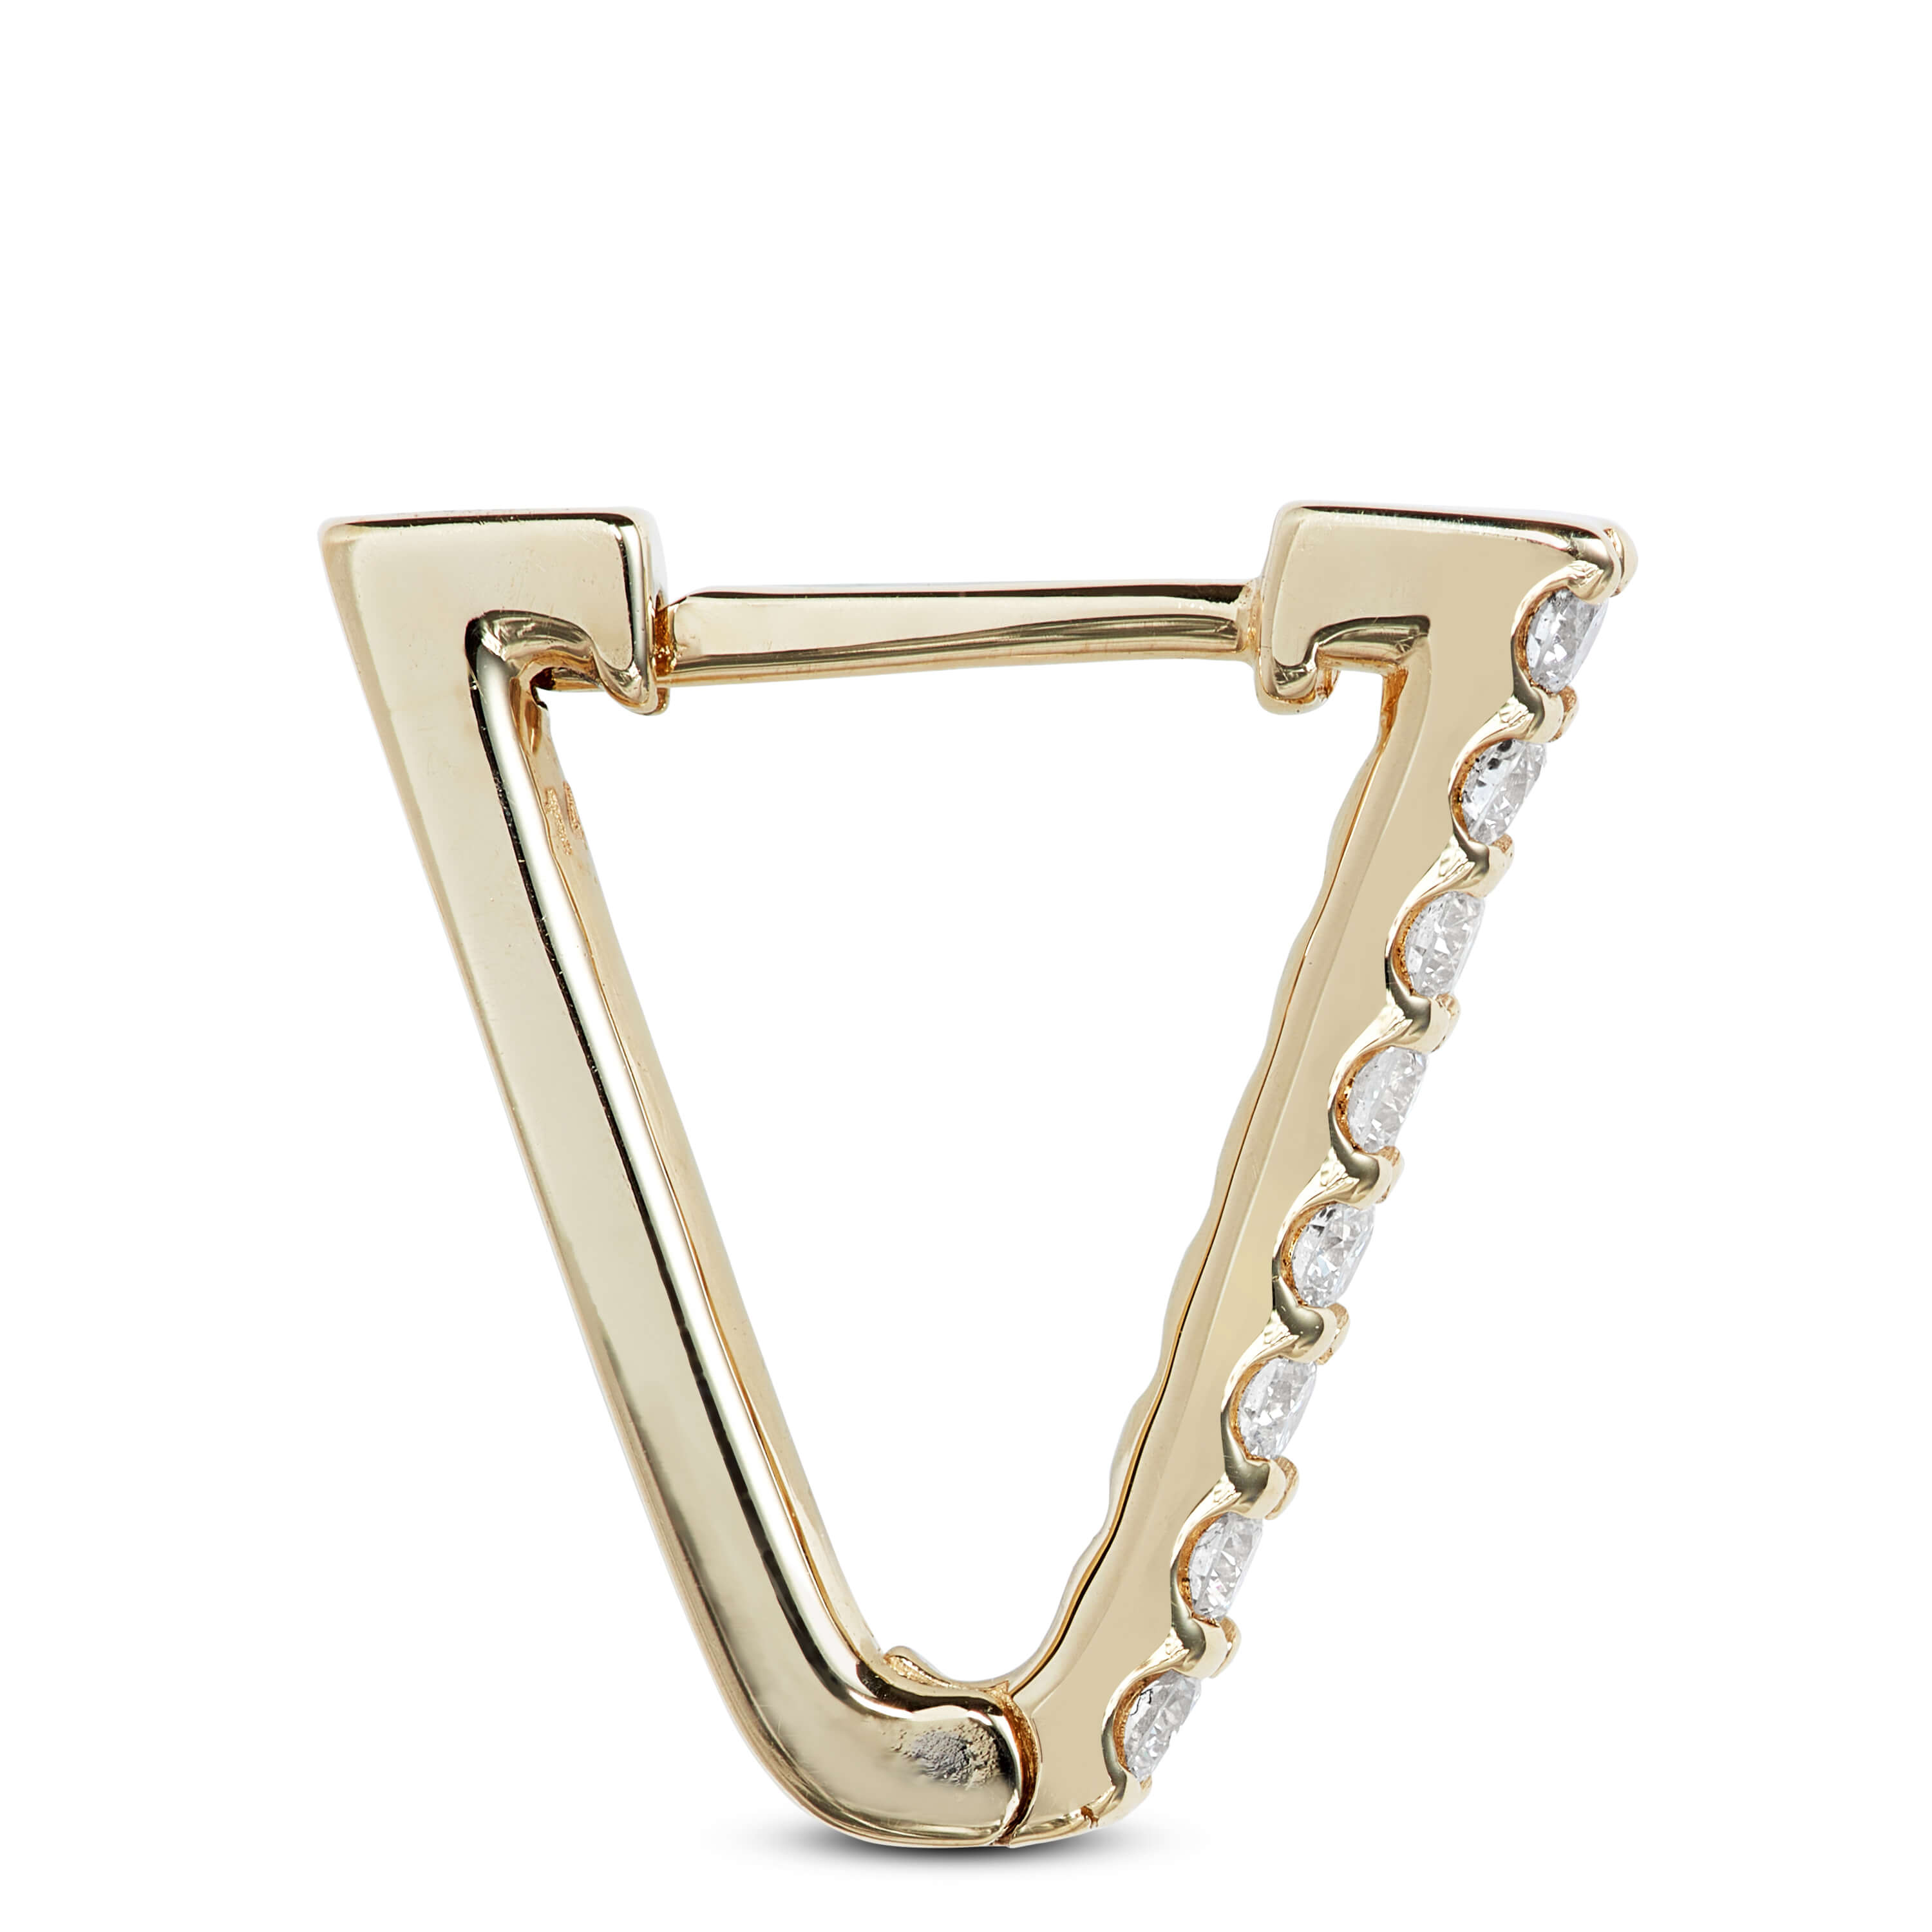 Ben Bridge Jewelers Women's V Initial Letter Pendant Necklace